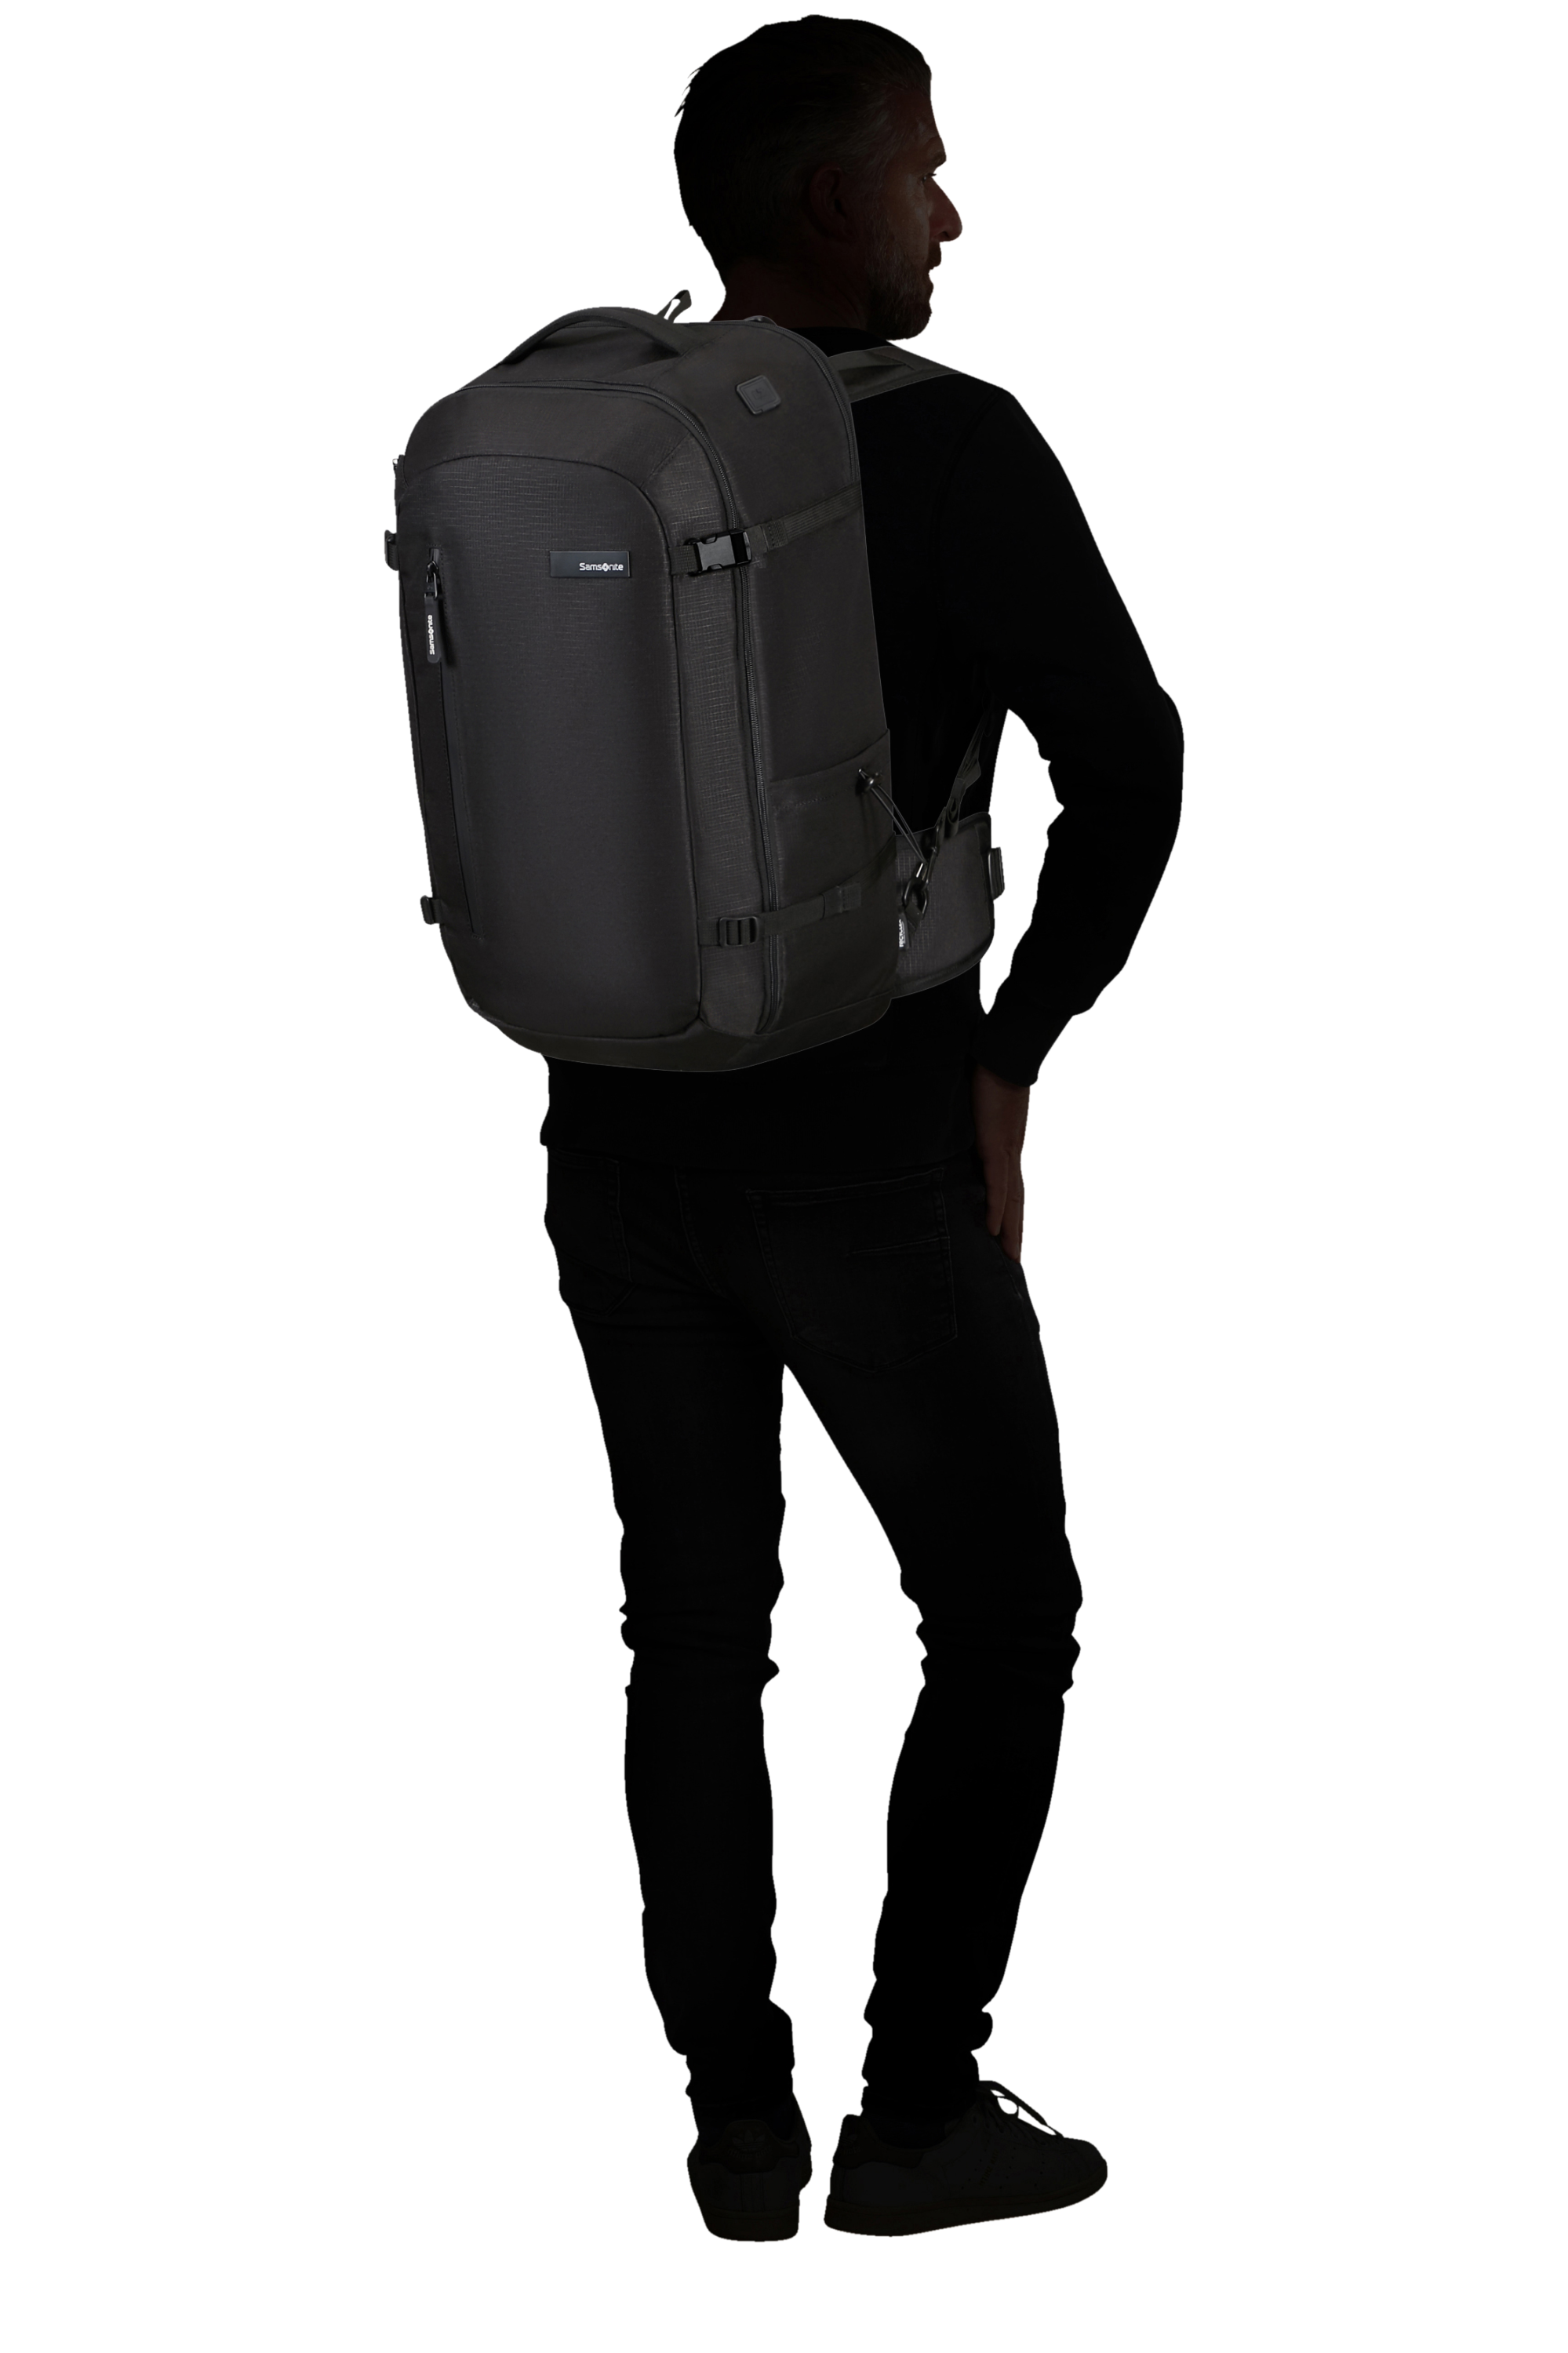 Roader Travel Backpack Small 38 liter